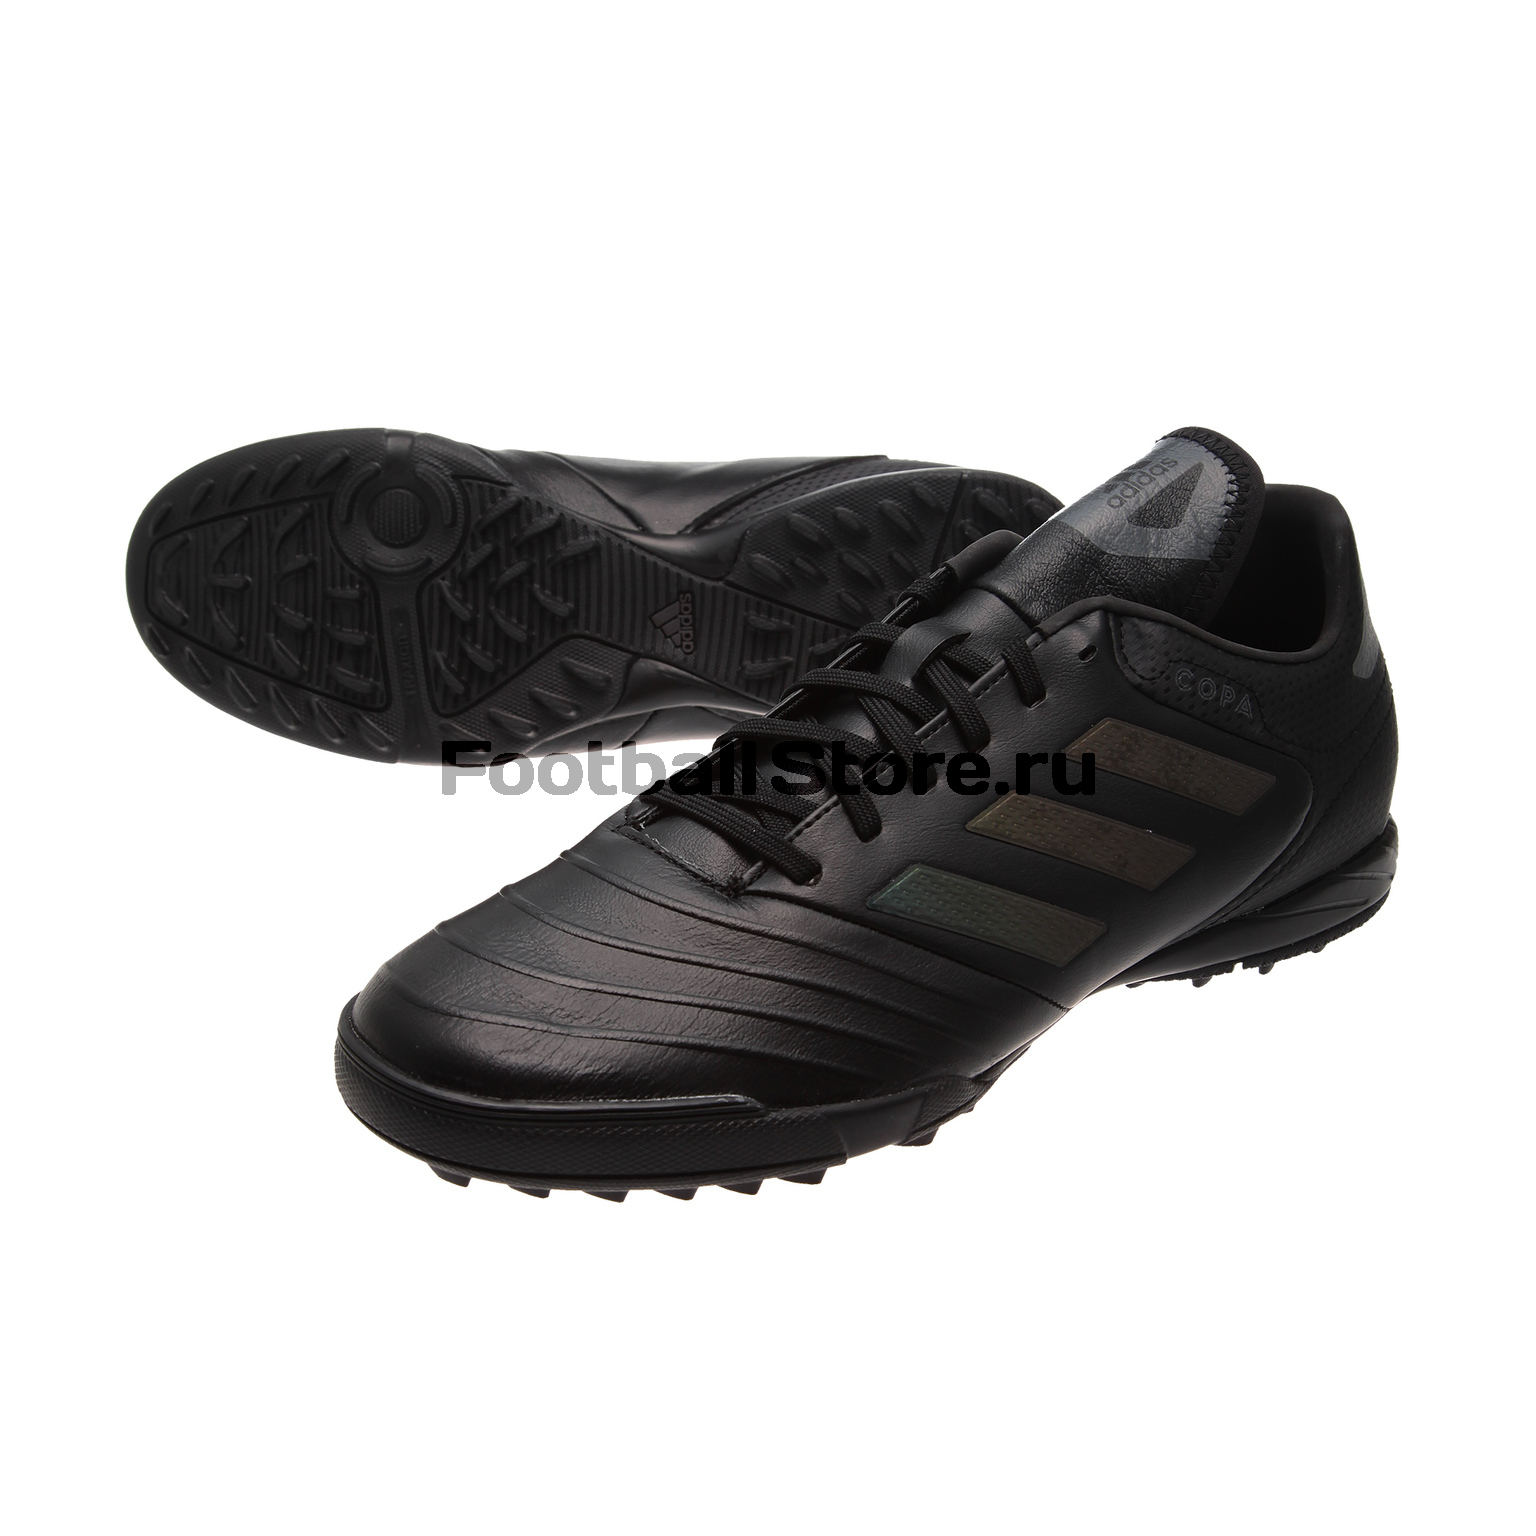 Шиповки Adidas Copa Tango 18.3 TF CP9023